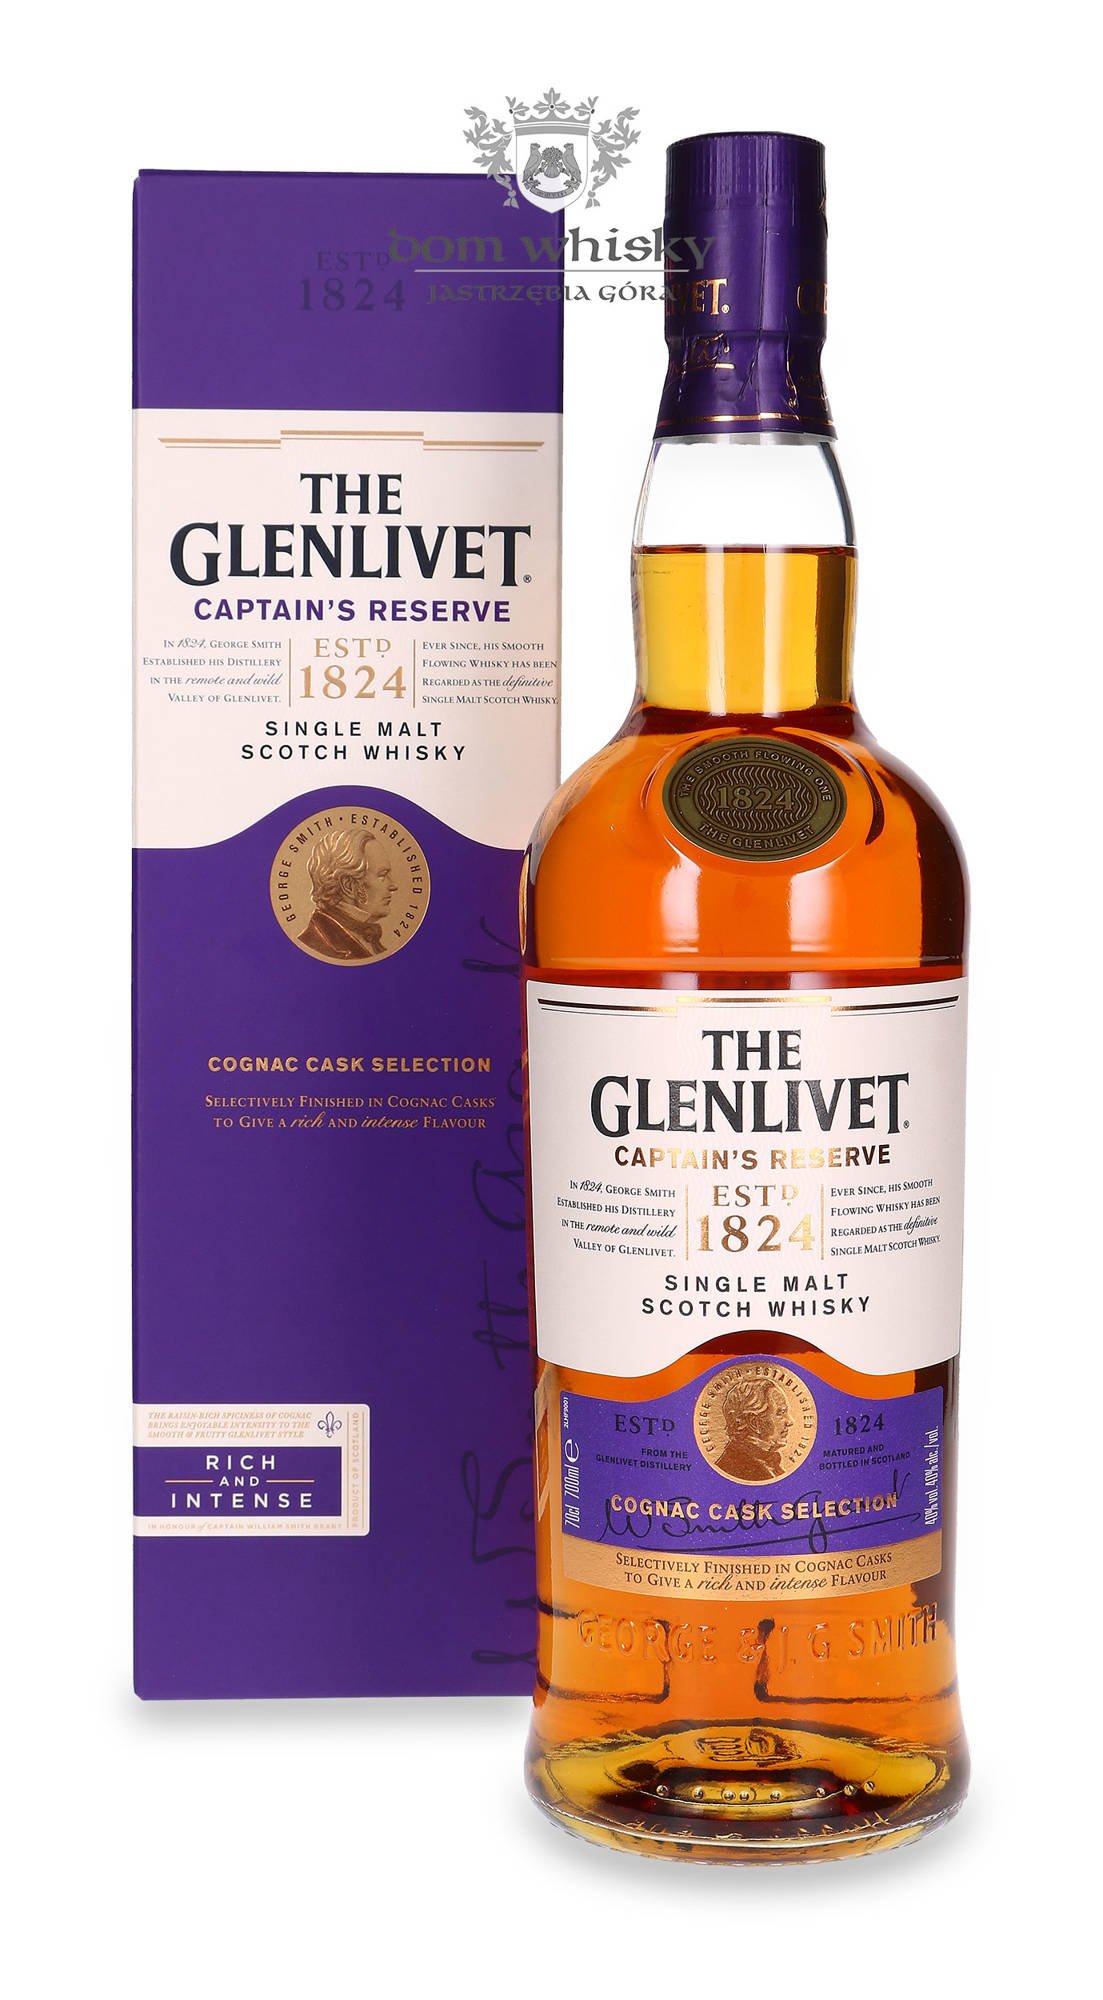 Captain's Reserve Single Malt Scotch Whisky - The Glenlivet